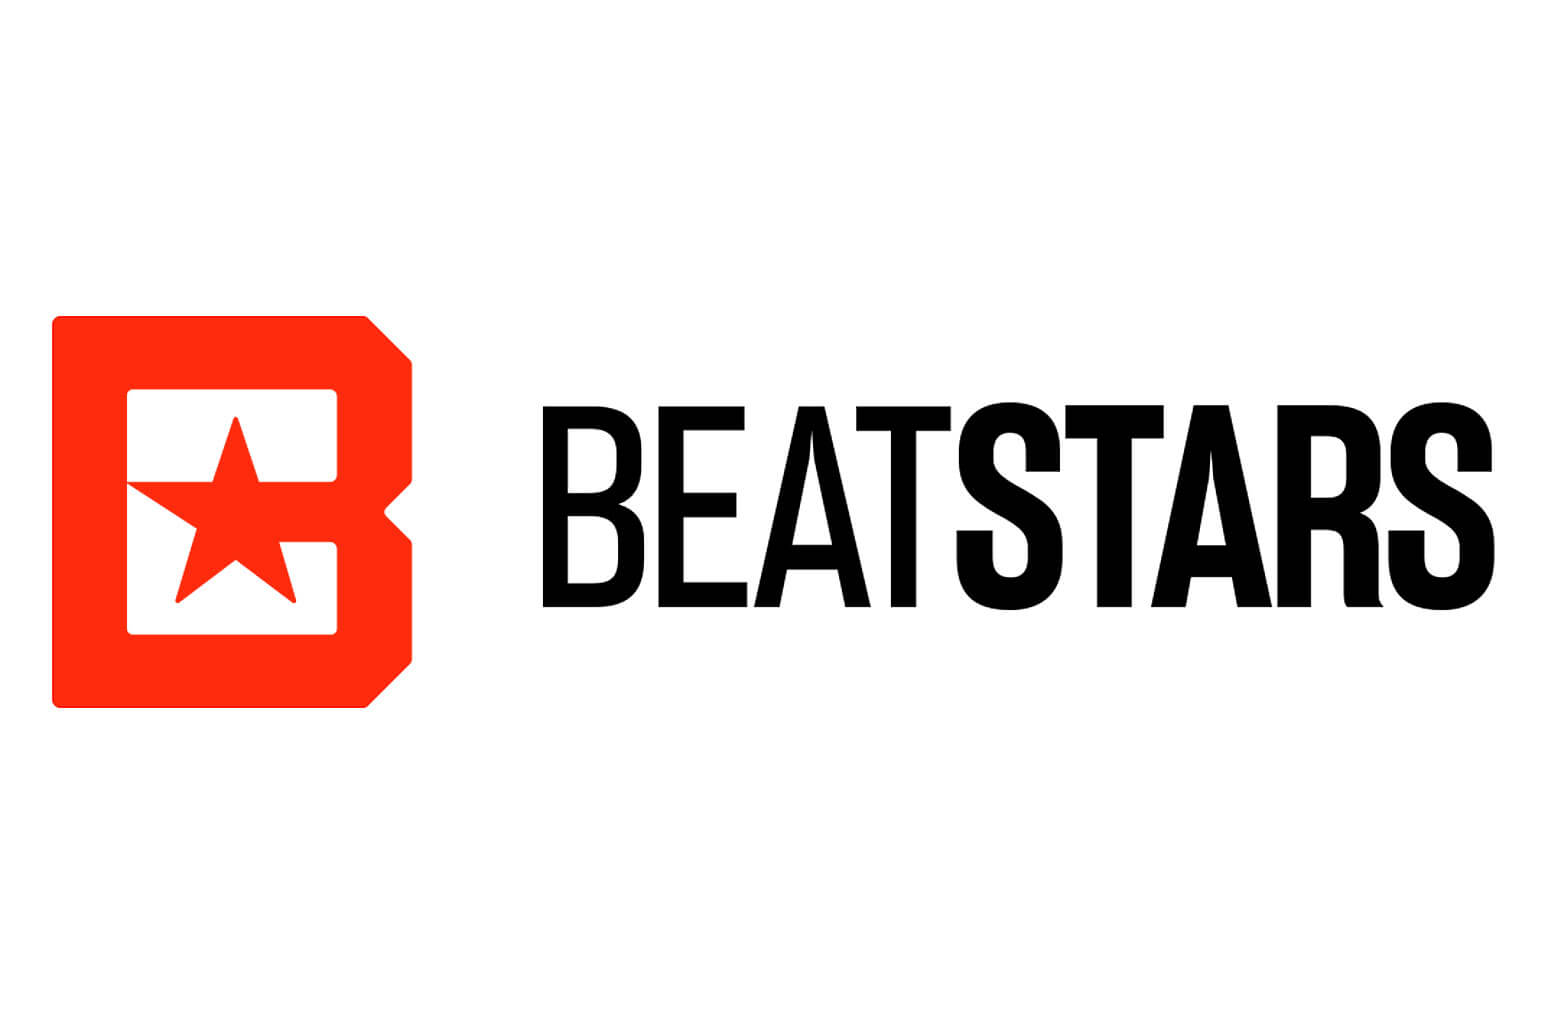 BeatStars has paid out $200M to creators on its platform